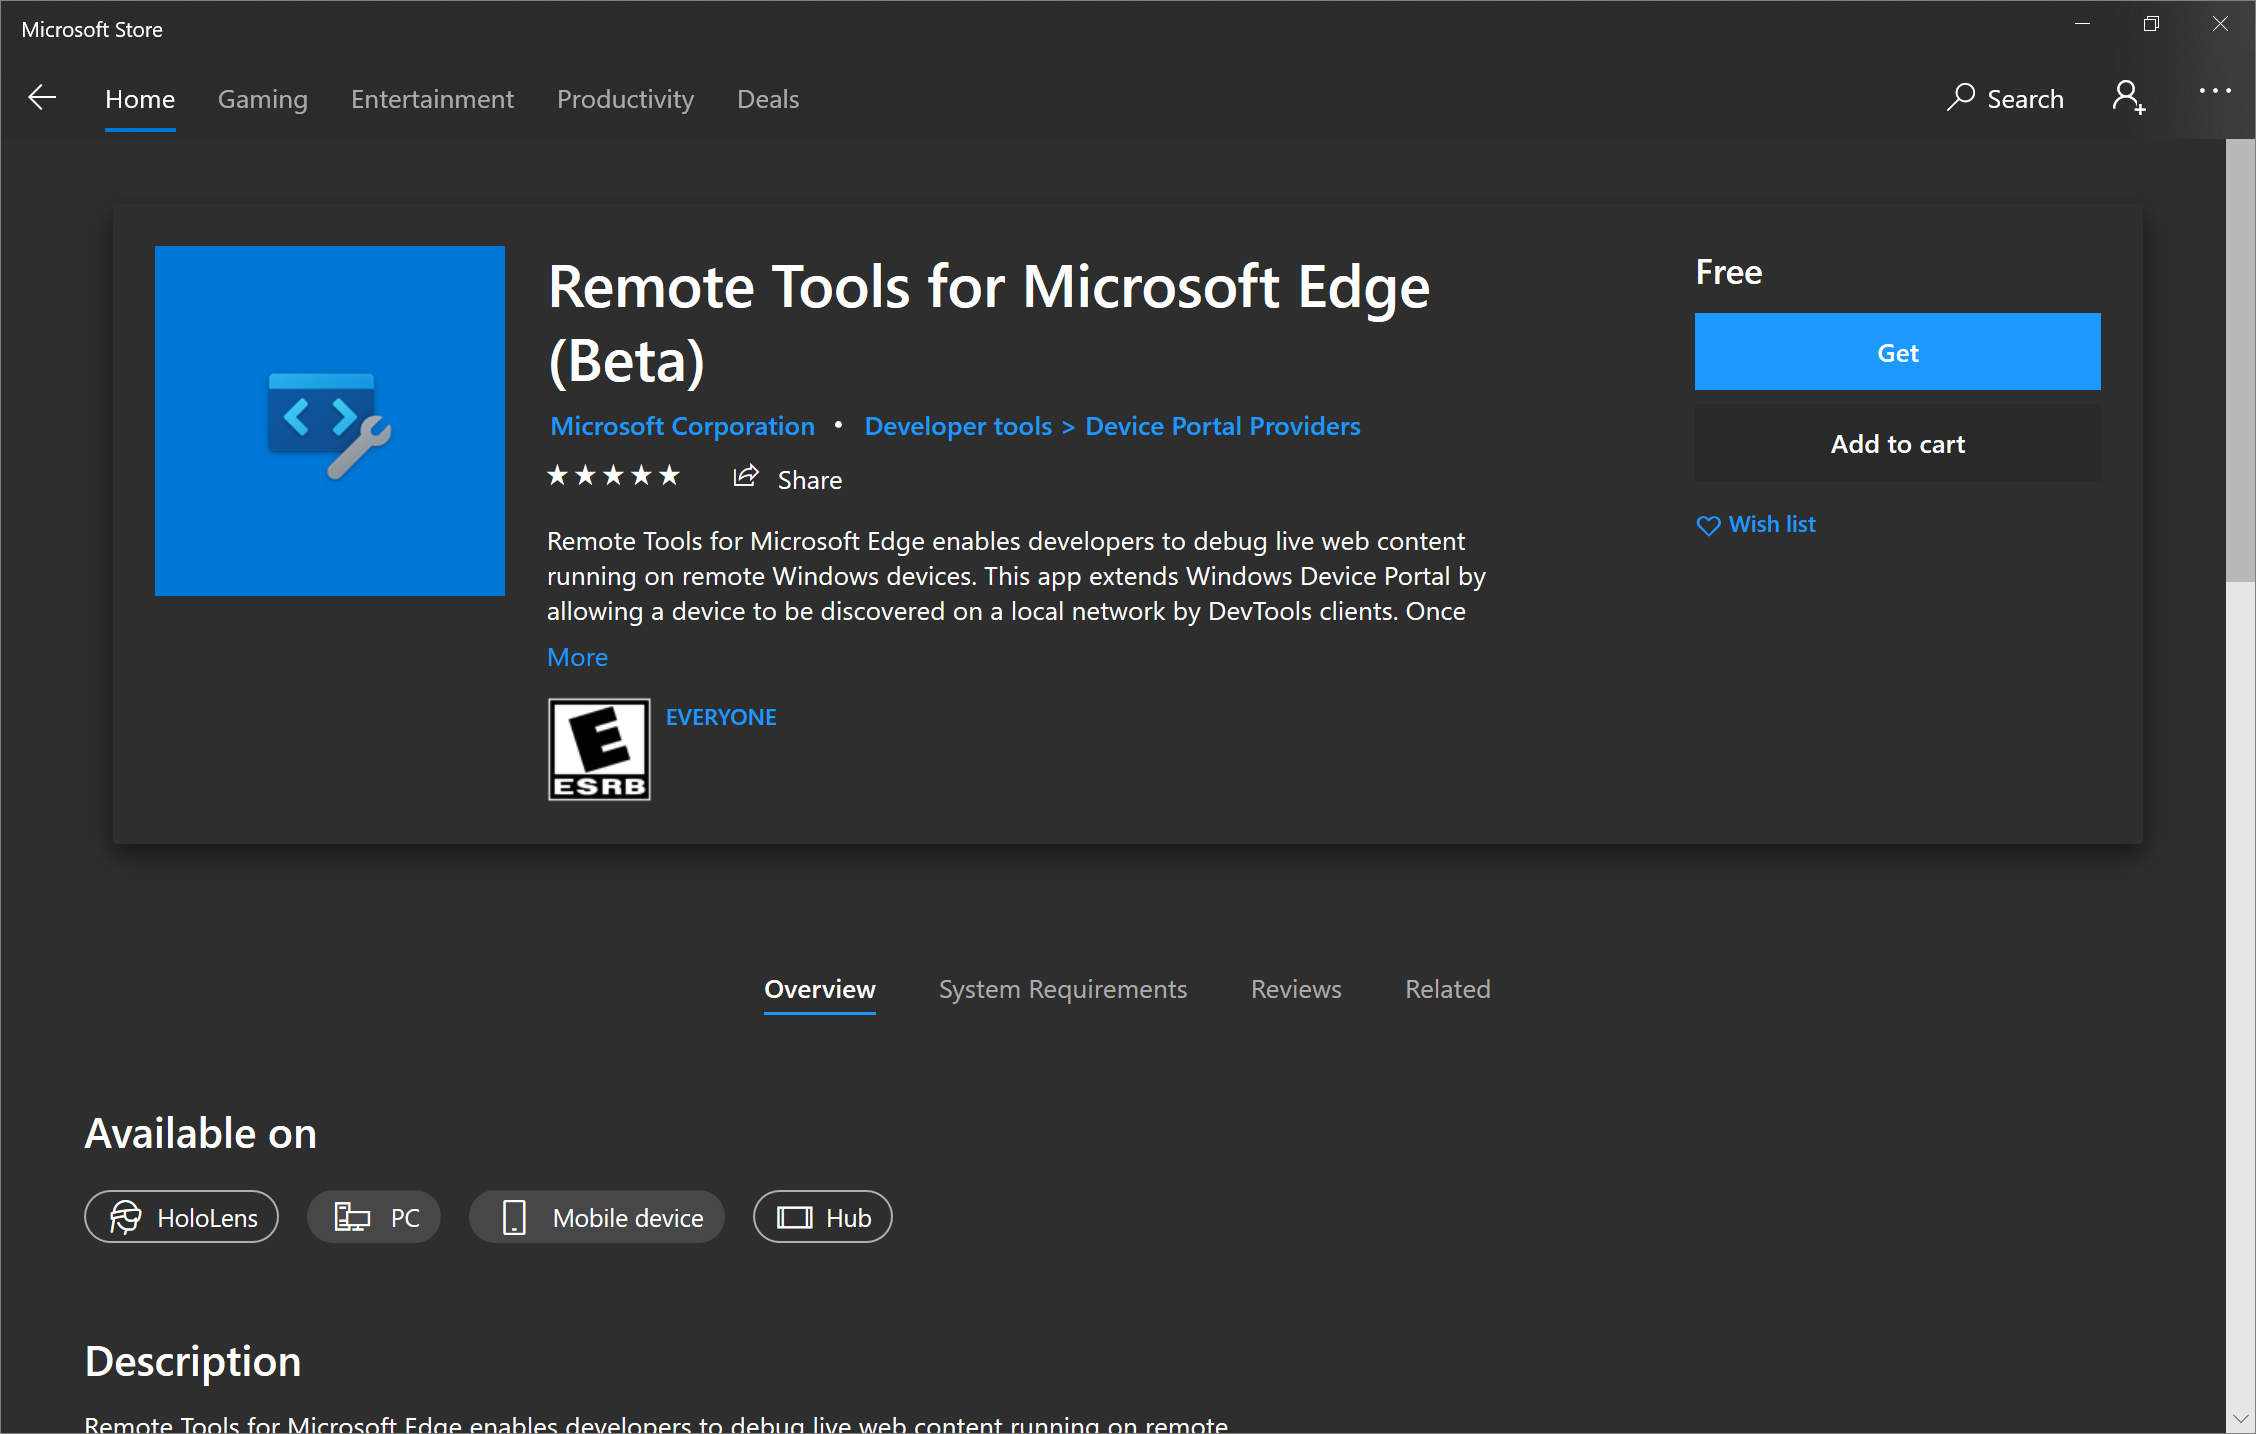 Die Im Microsoft Store verfügbare Remotetools für Microsoft Edge (Beta)-App